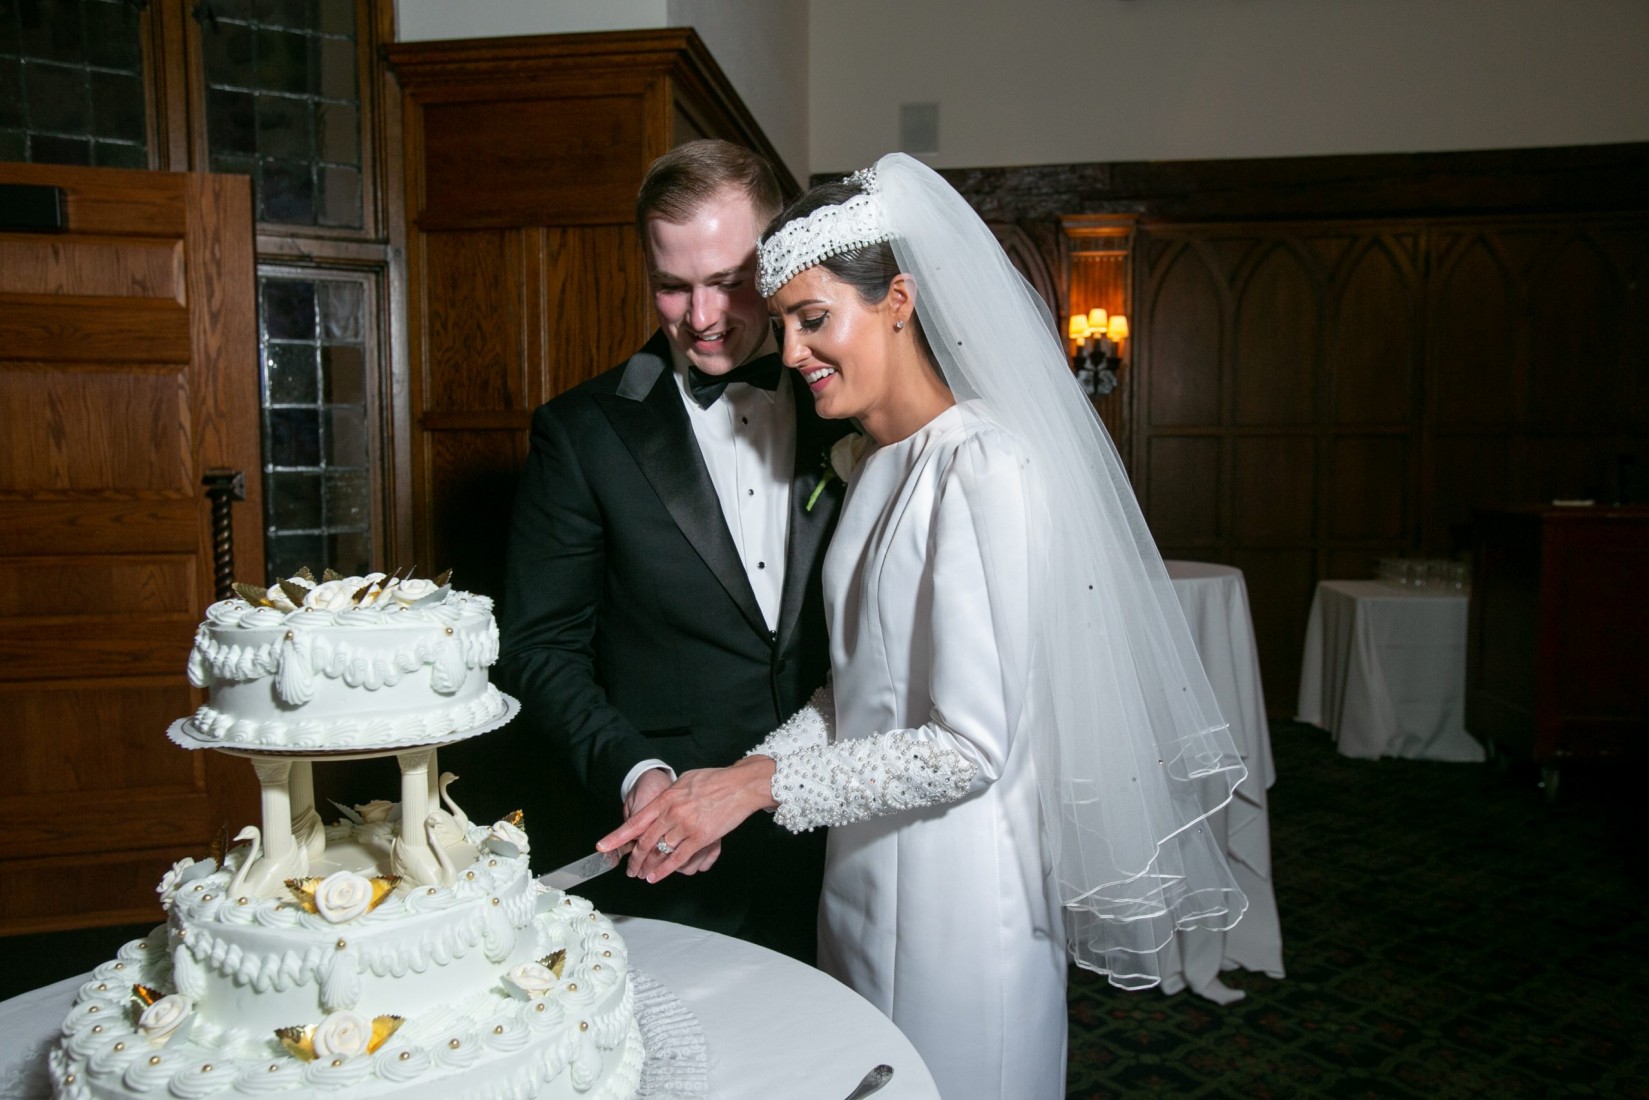 Cutting the Wedding Cake wedding photography